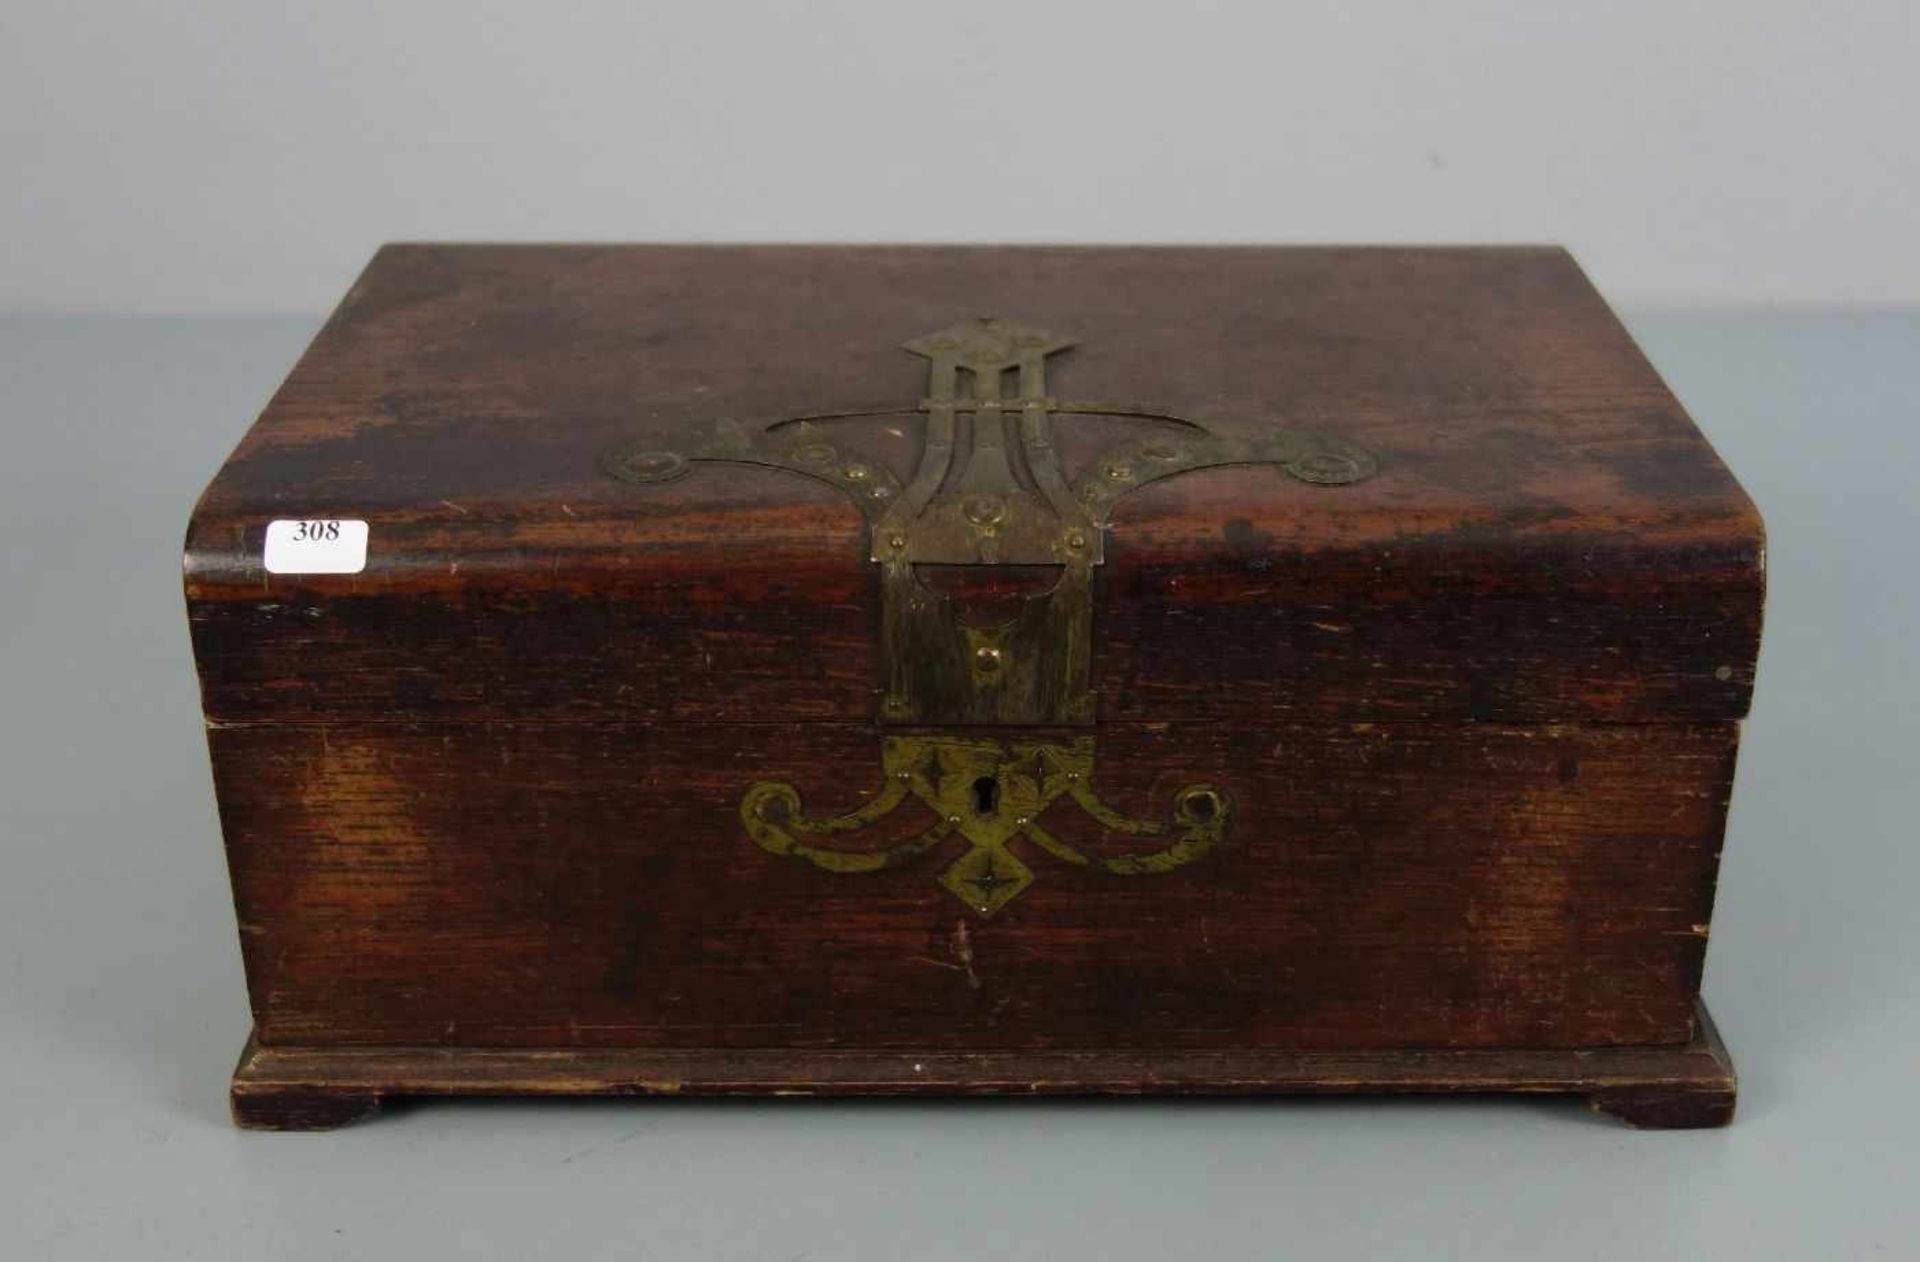 JUGENDSTIL SCHATULLE / art nouveau box, um 1900. Eiche, rotbraun lasiert. Rechteckige Schatulle